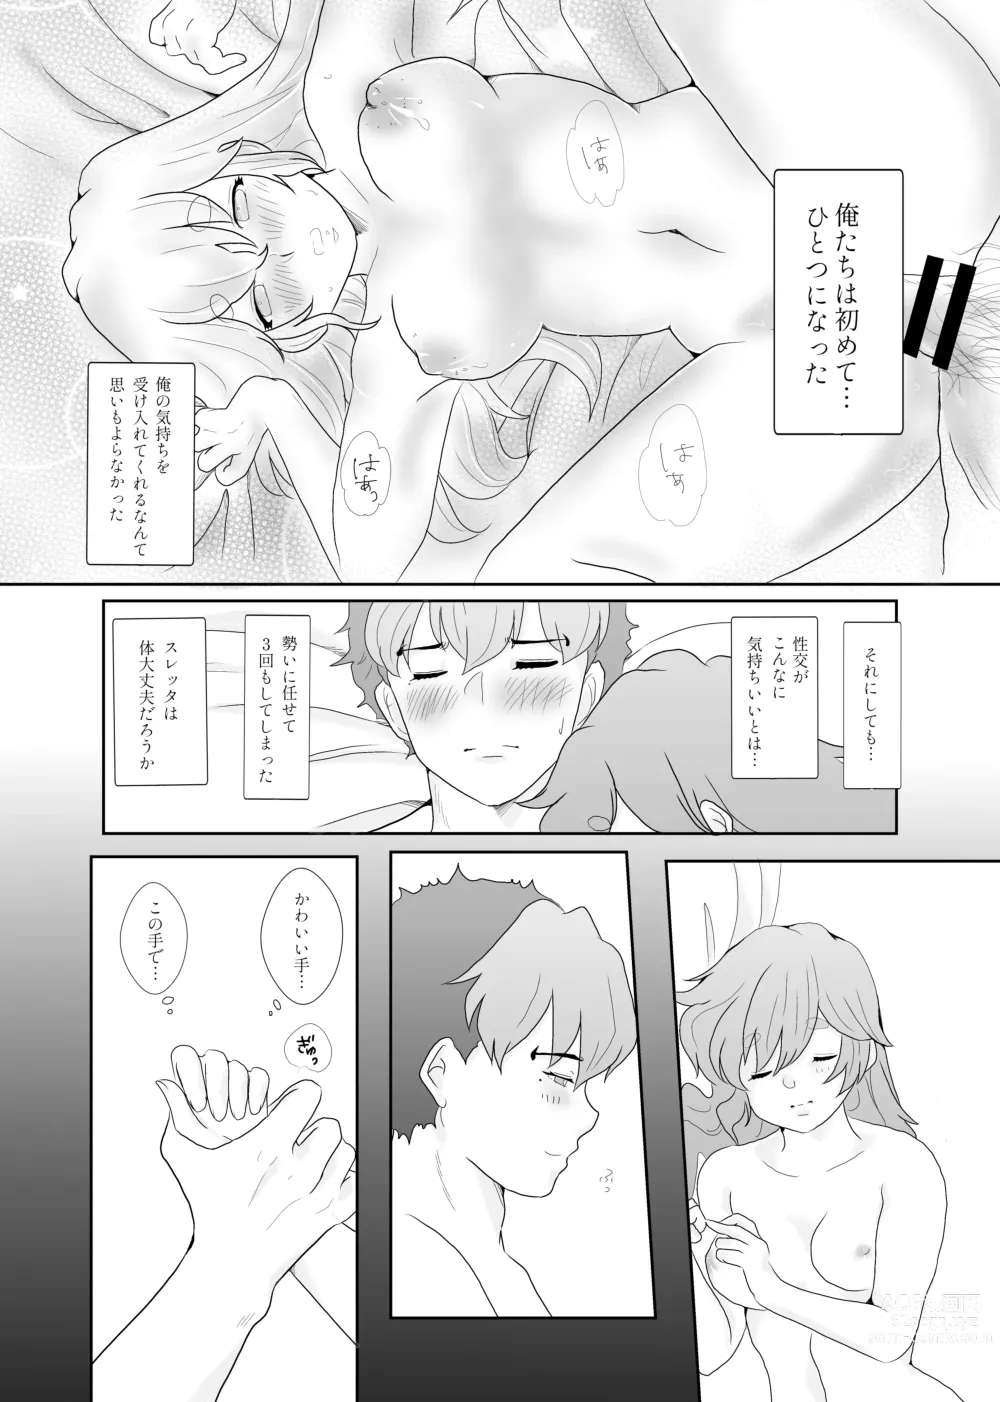 Page 5 of doujinshi Nichijō romantikku